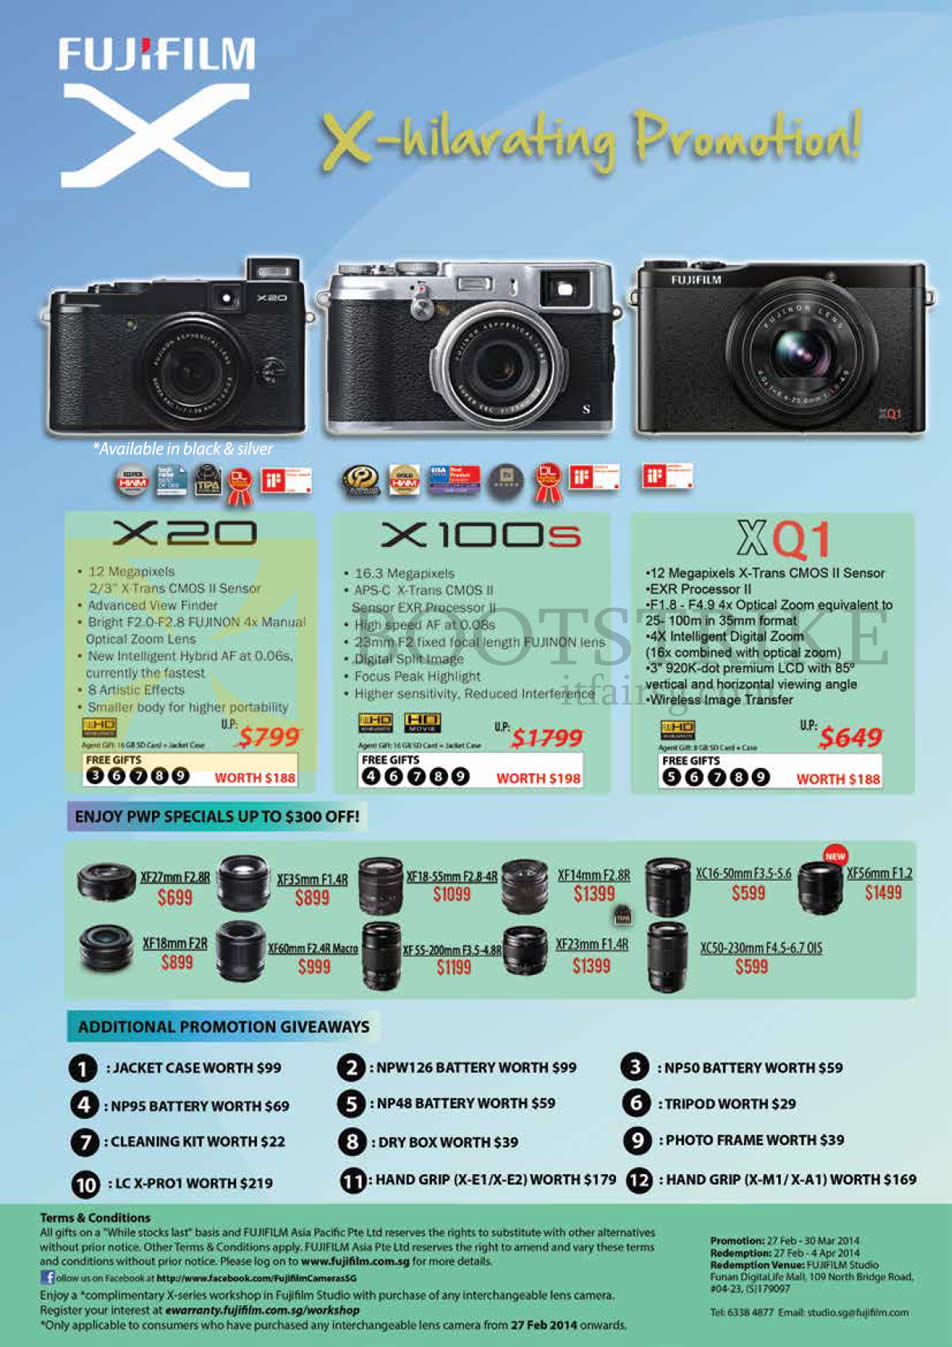 IT SHOW 2014 price list image brochure of Fujifilm Digital Cameras (No Prices) X20, X100s, XQ1